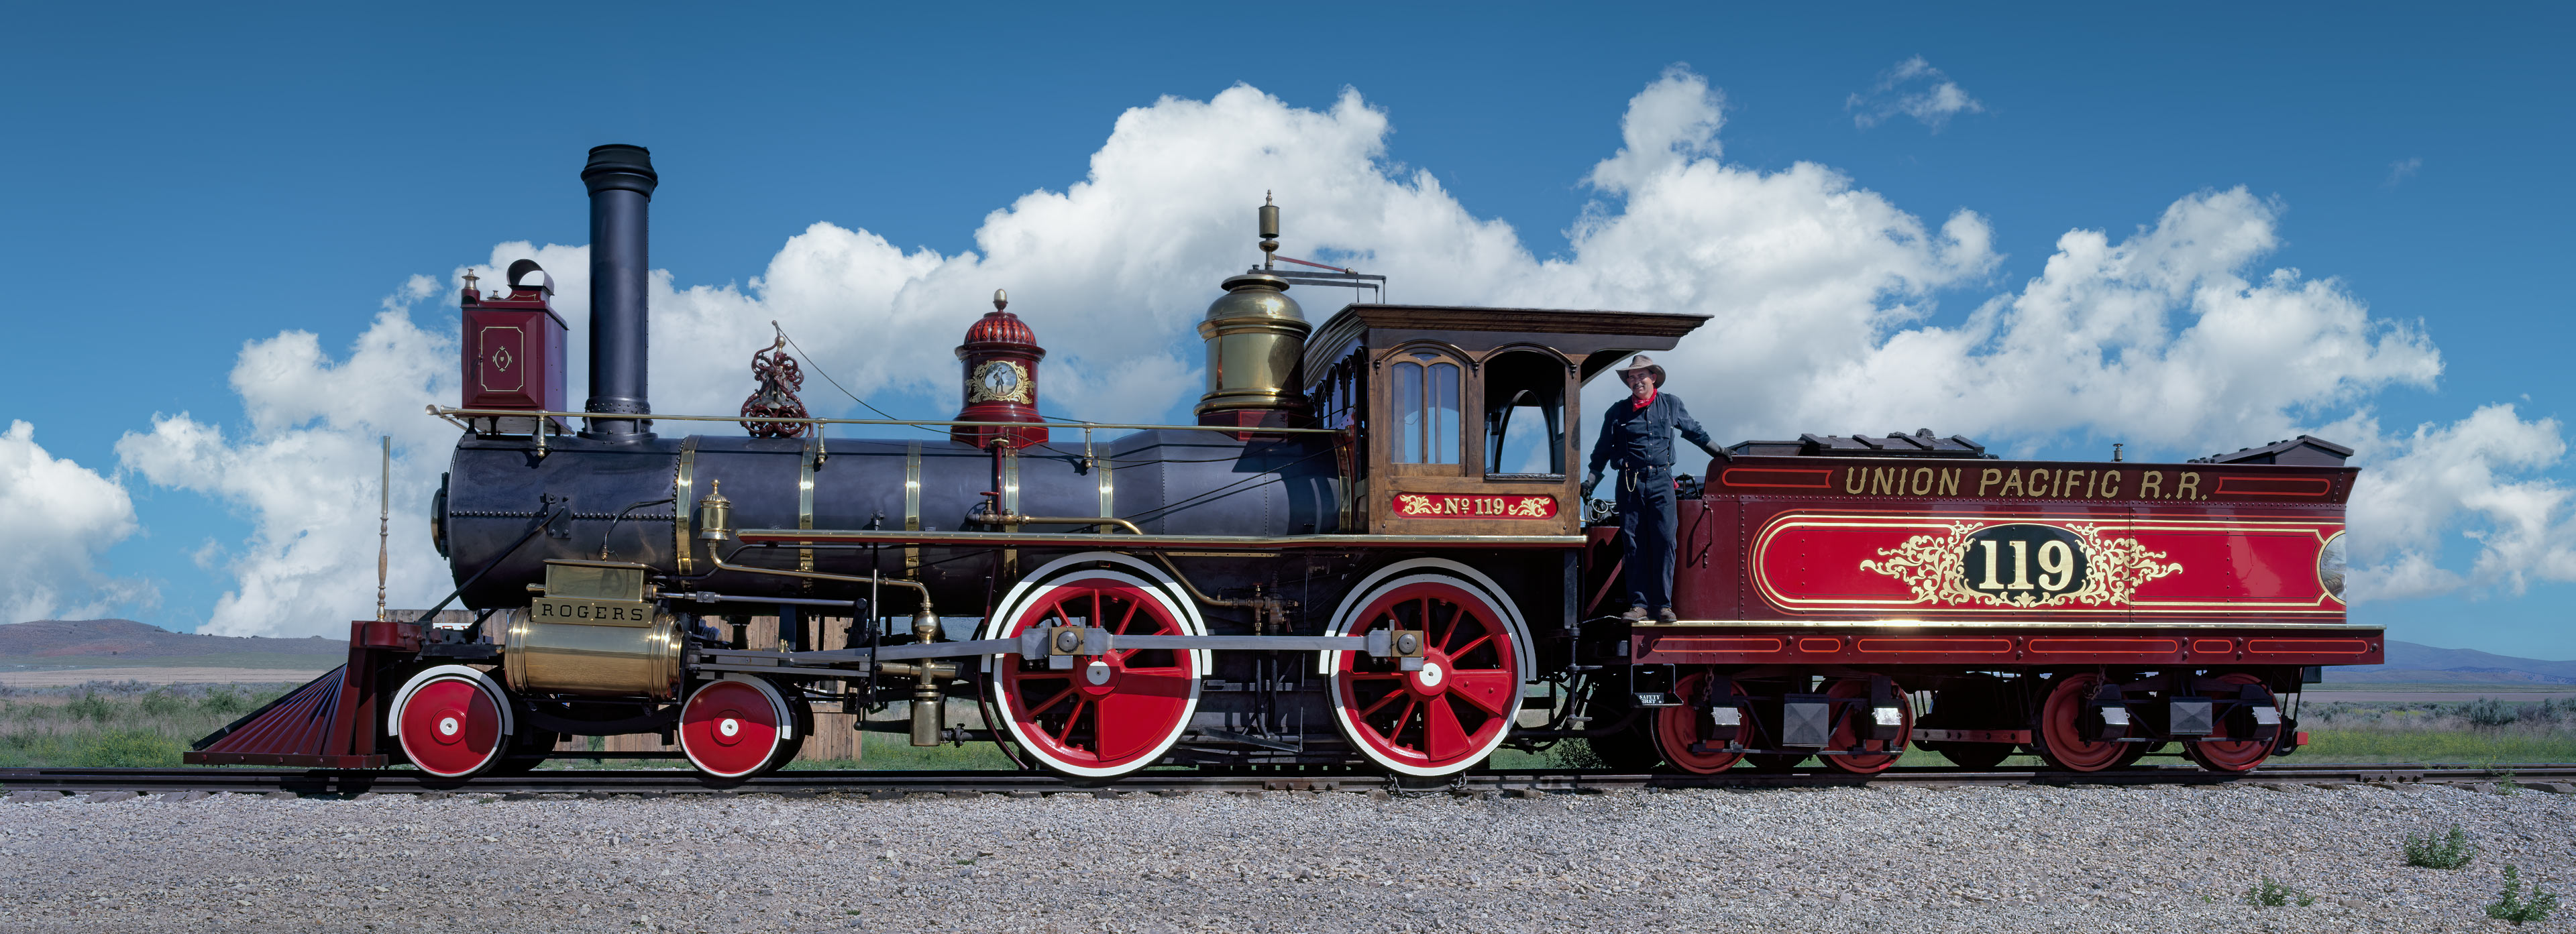 Locomotive 119, Golden Spike, Utah, USA (40500_clds)